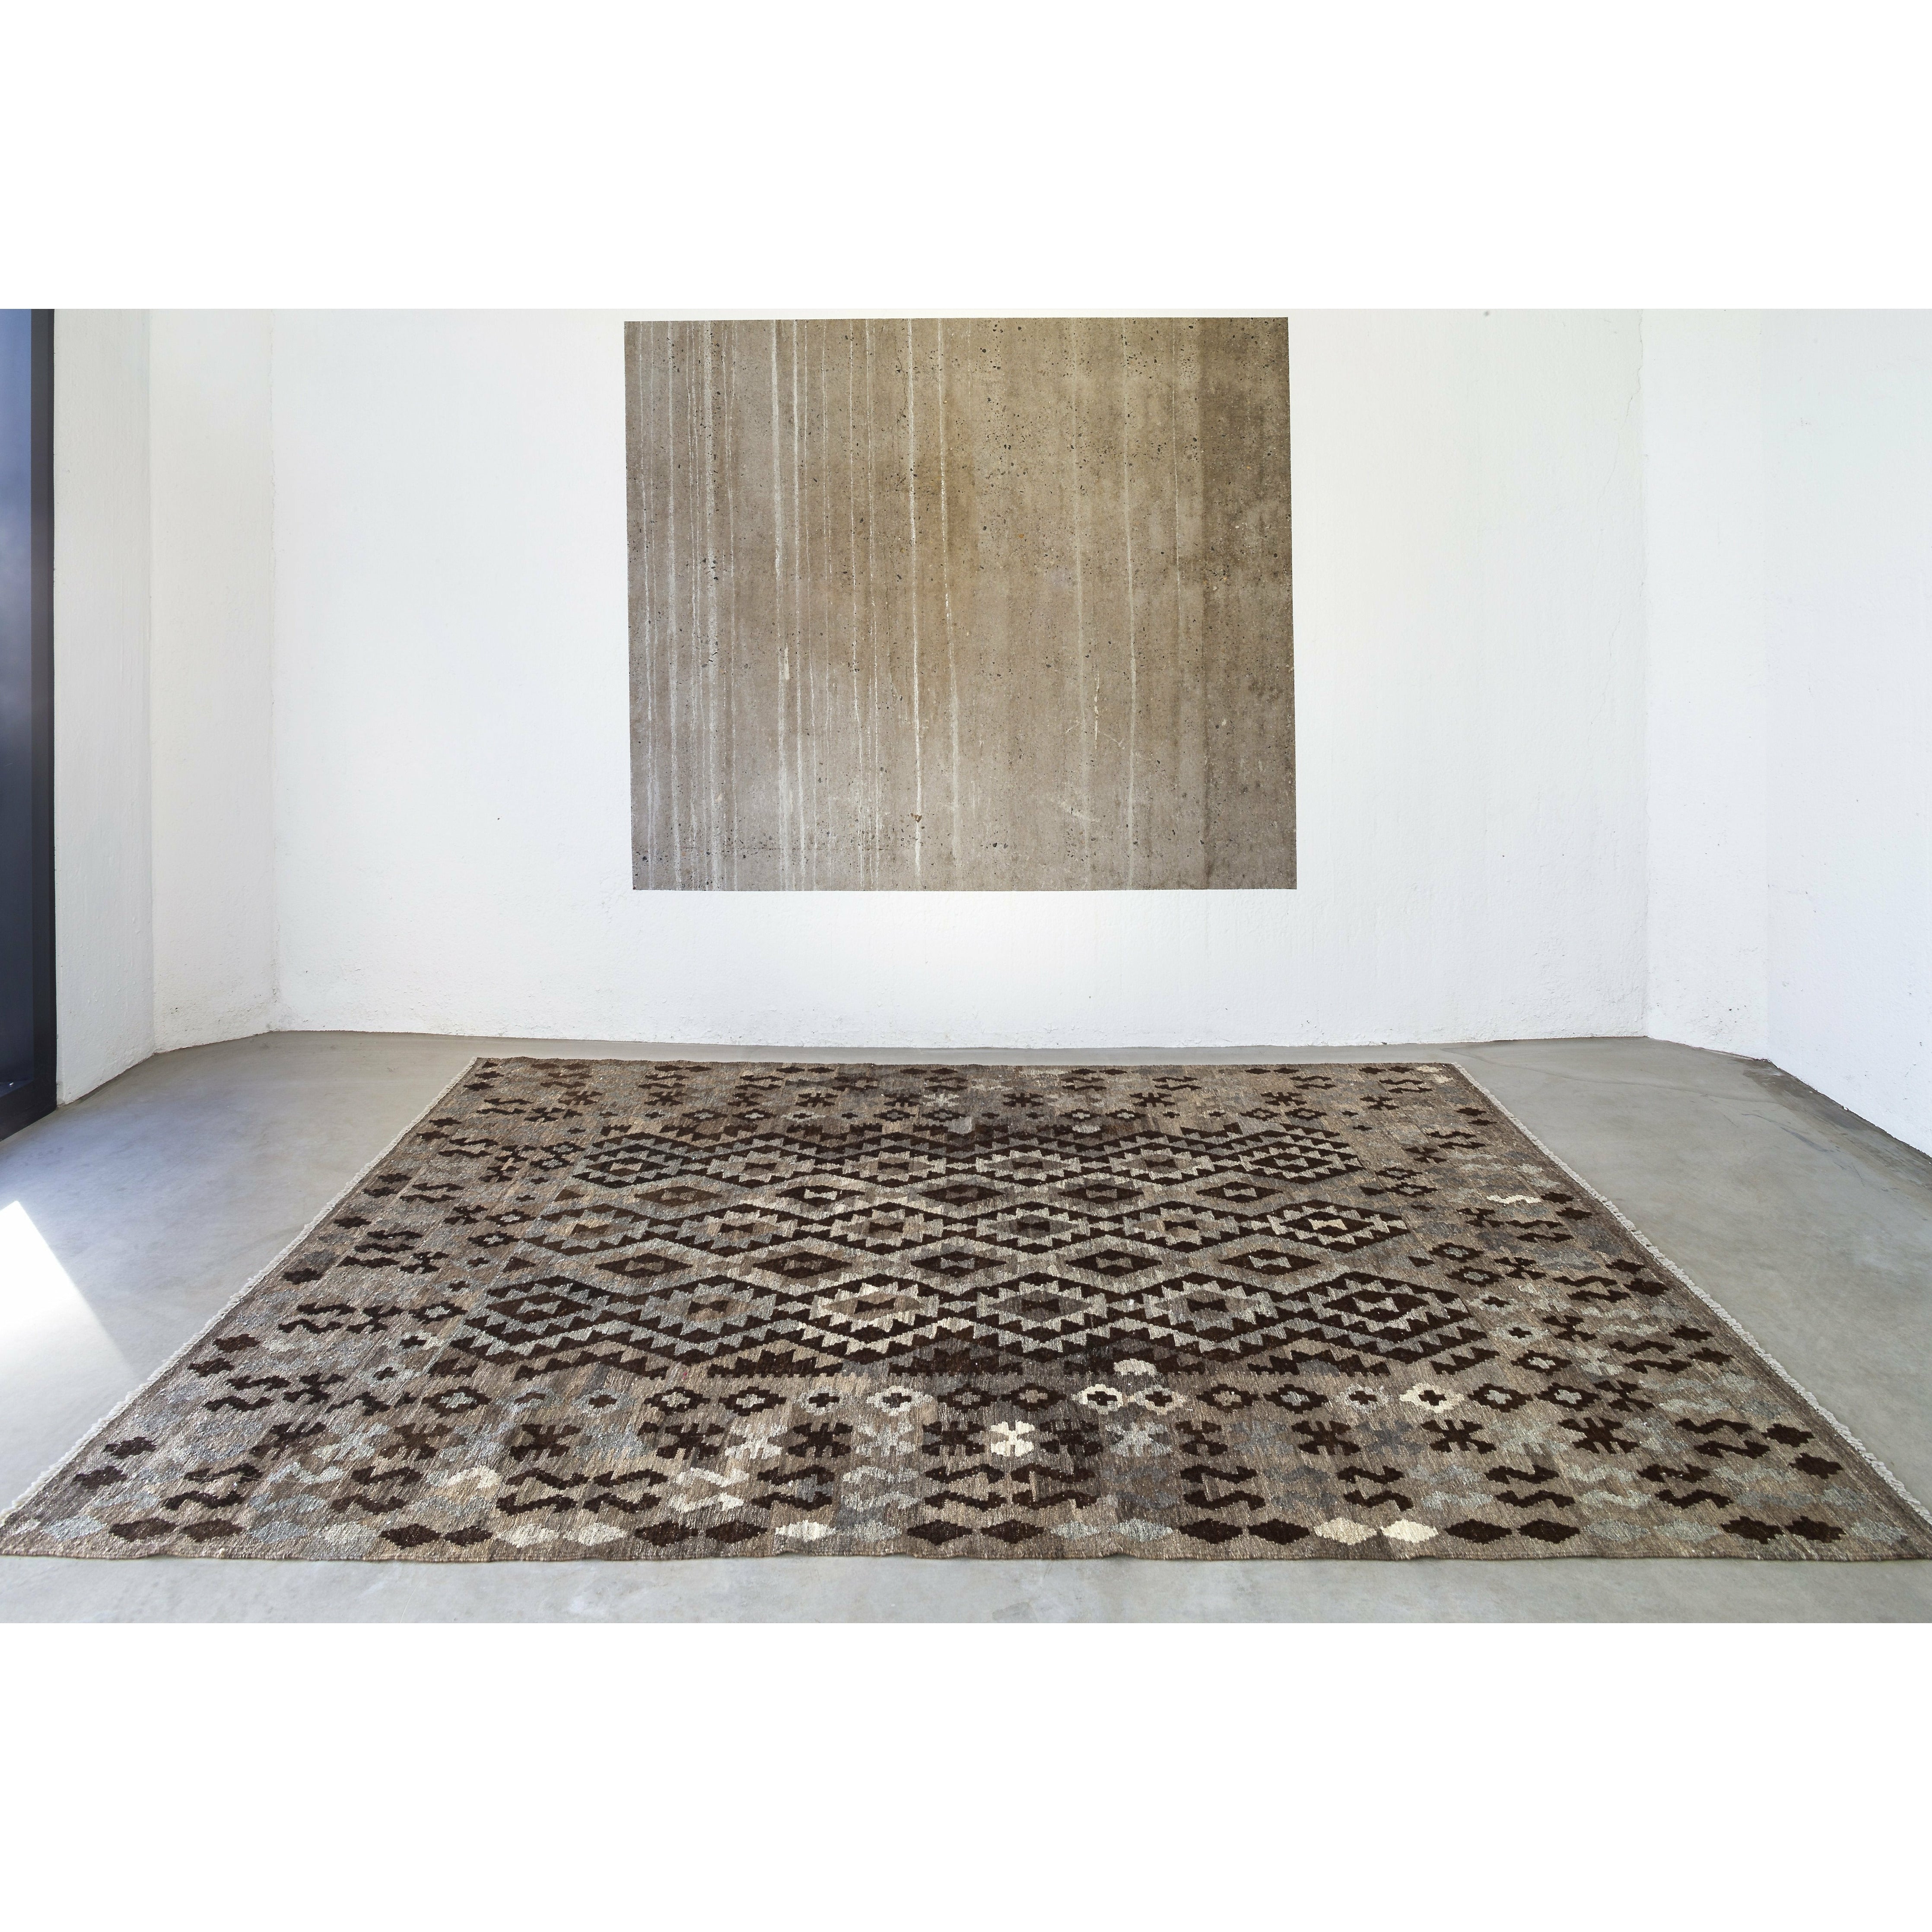 Massimo Kelim Tapis naturel gris foncé / brun / noir, 150x200 cm